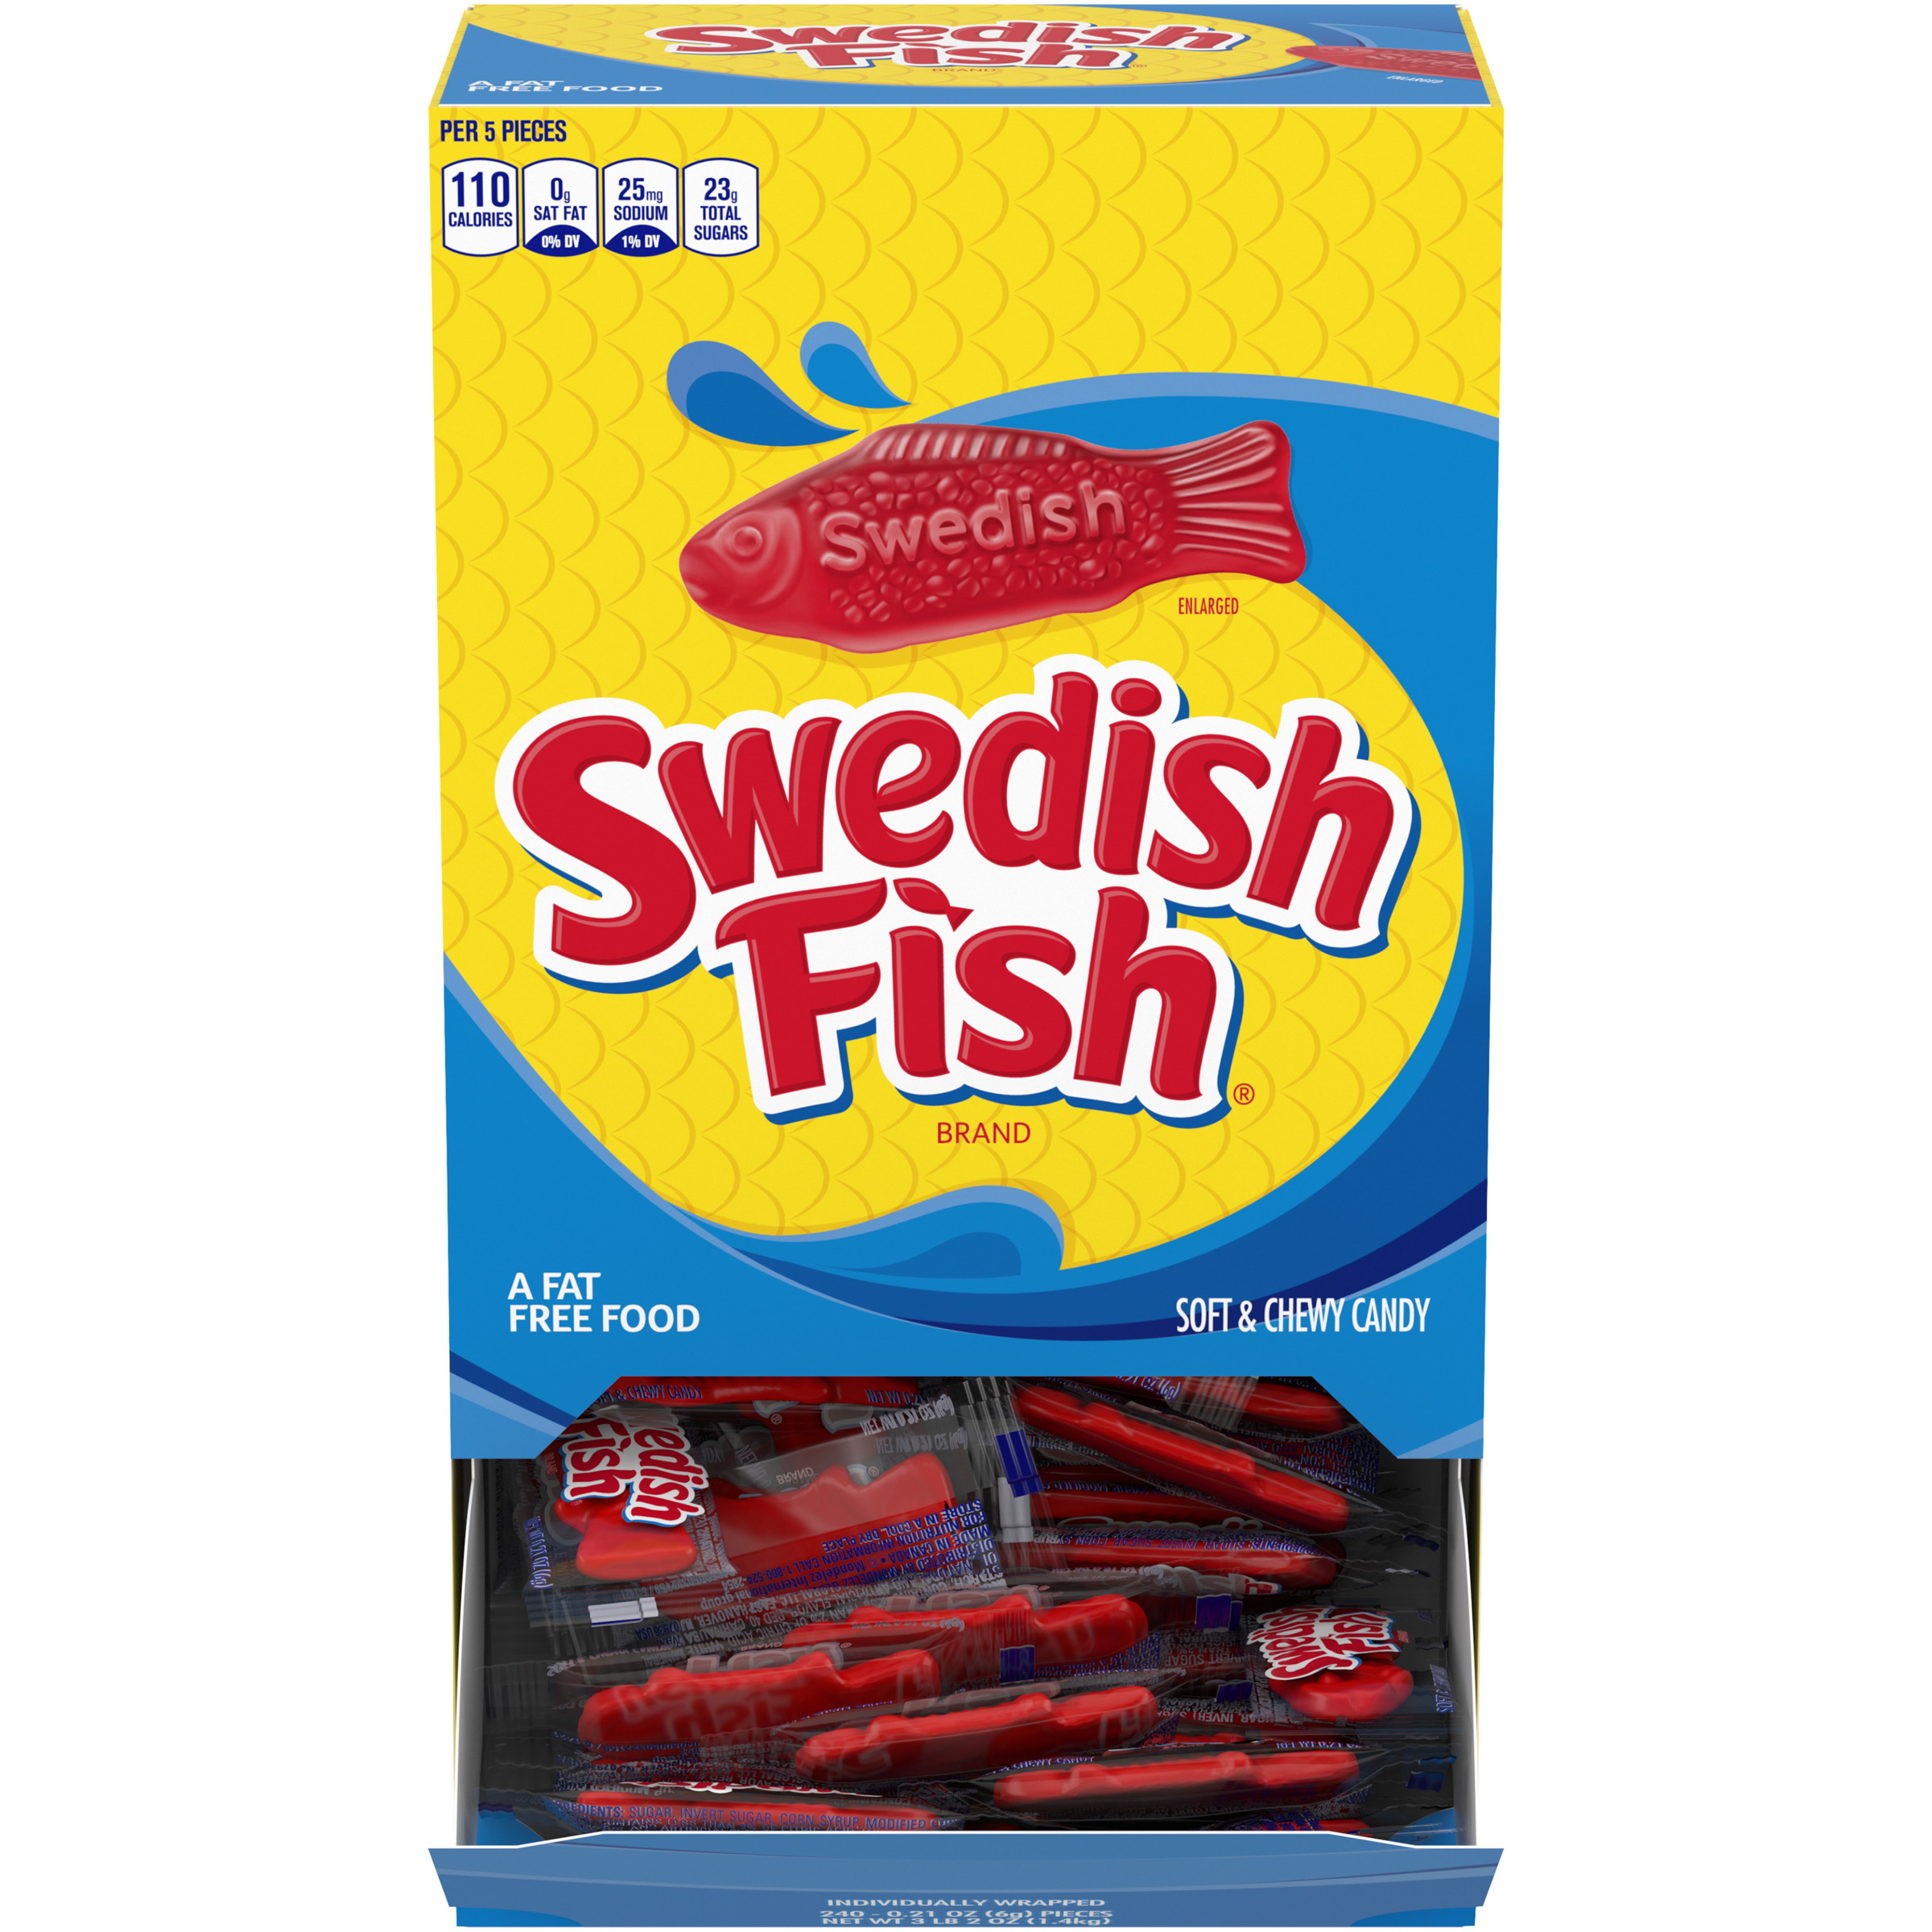 SWEDISH FISH Changemaker 8x240